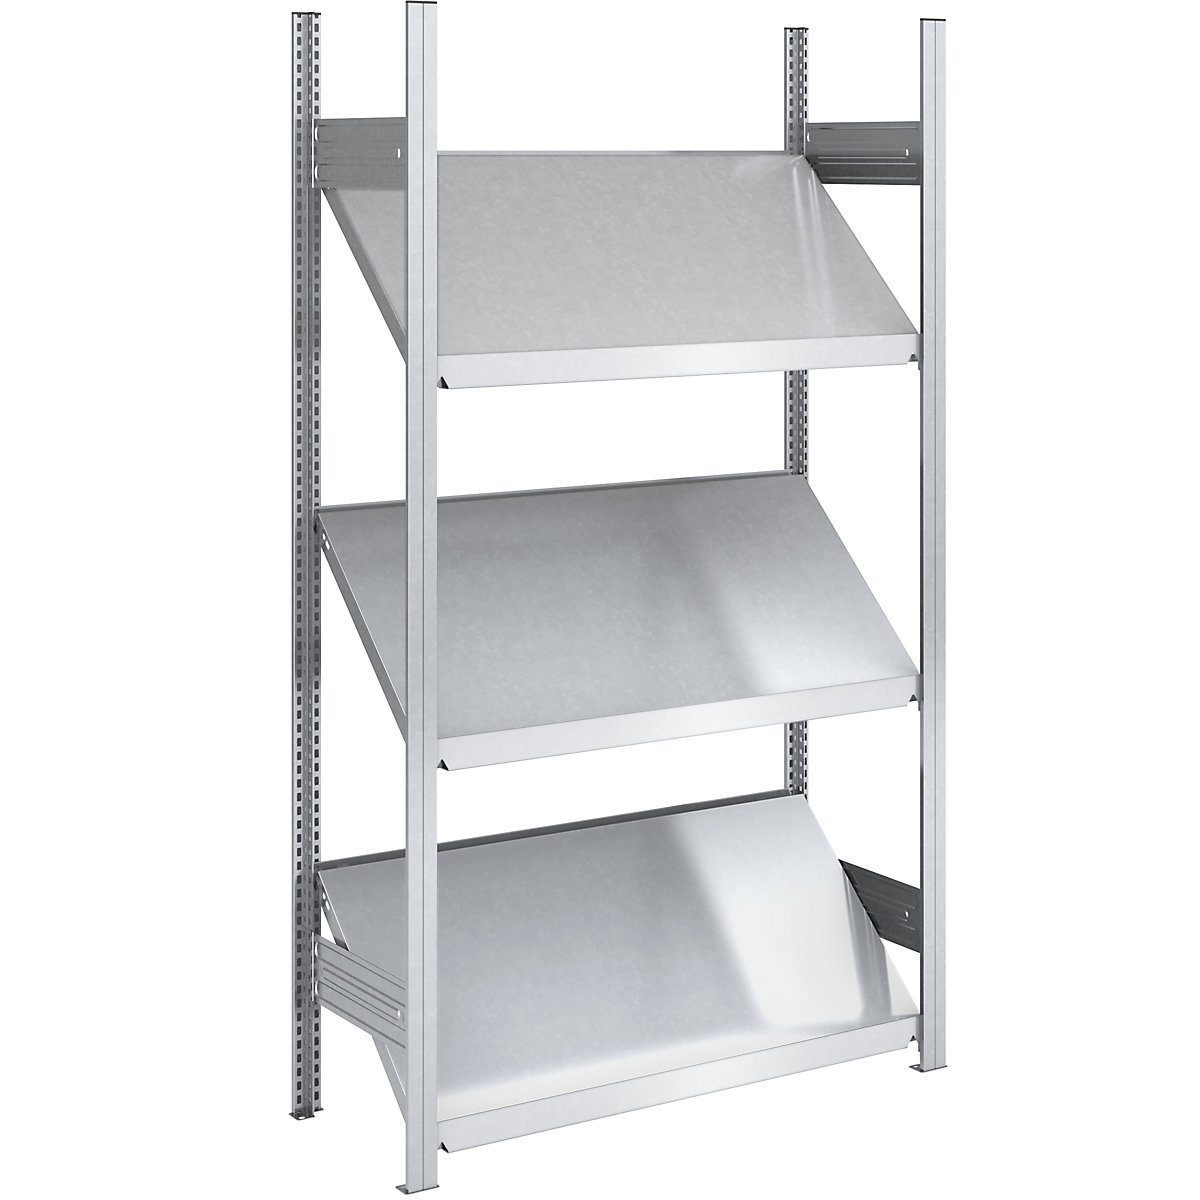 Slanted shelf unit – hofe, shelf unit height 2000 mm, shelf width 1000 mm, standard shelf unit, zinc plated